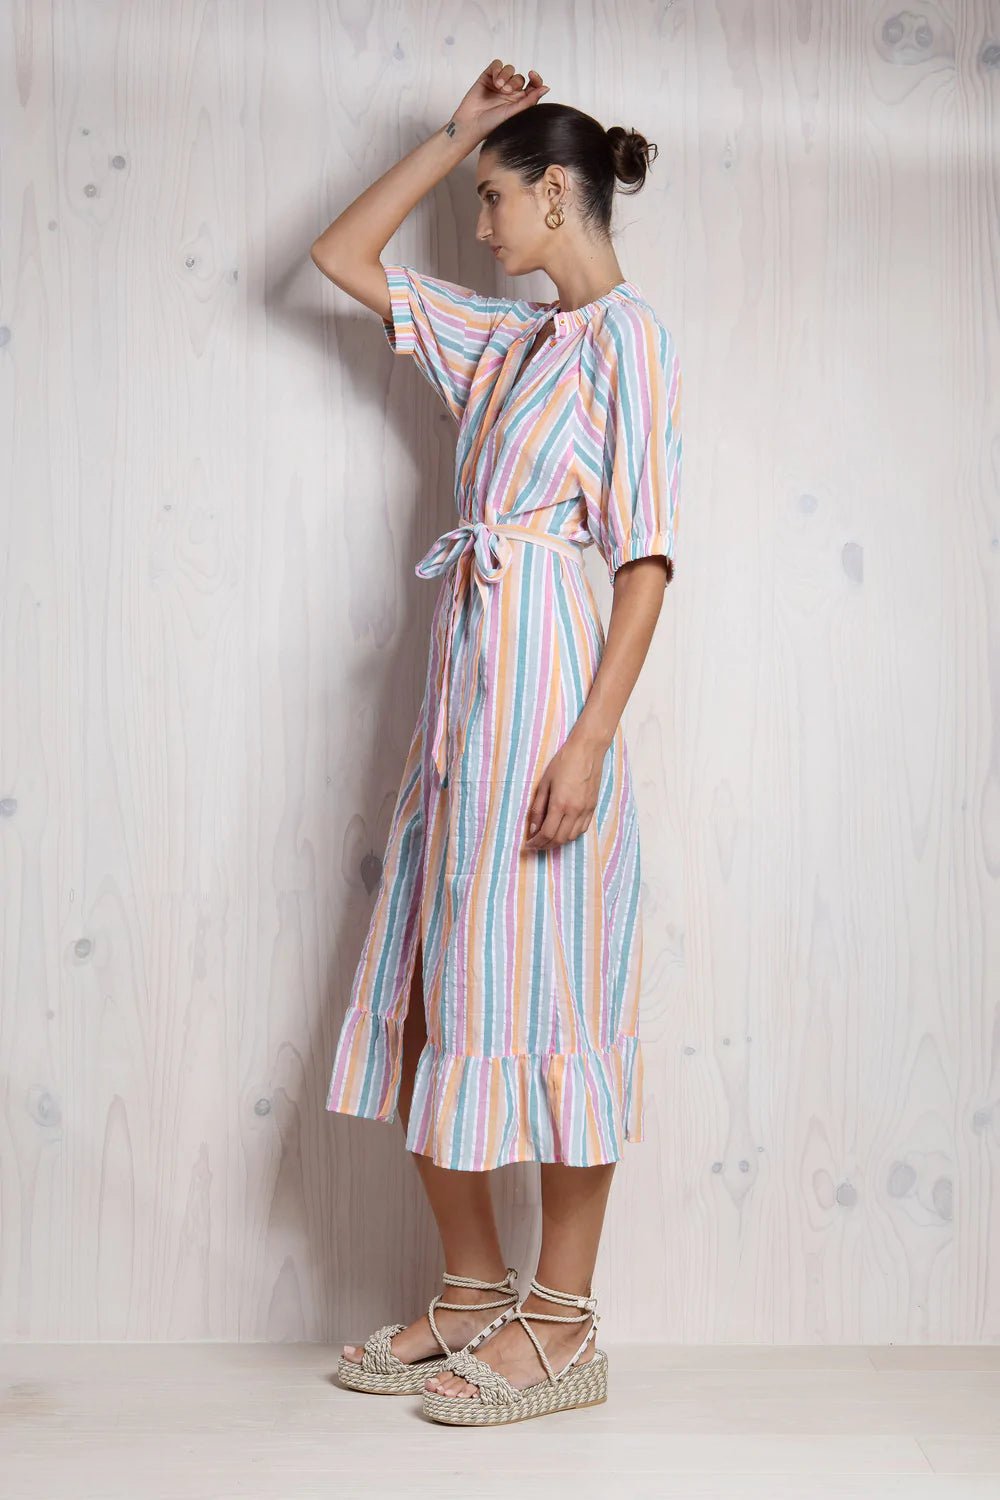 Shop Apollo Midi Dress in Royal Show Stripe Print by Lola Australia - Lola Australia